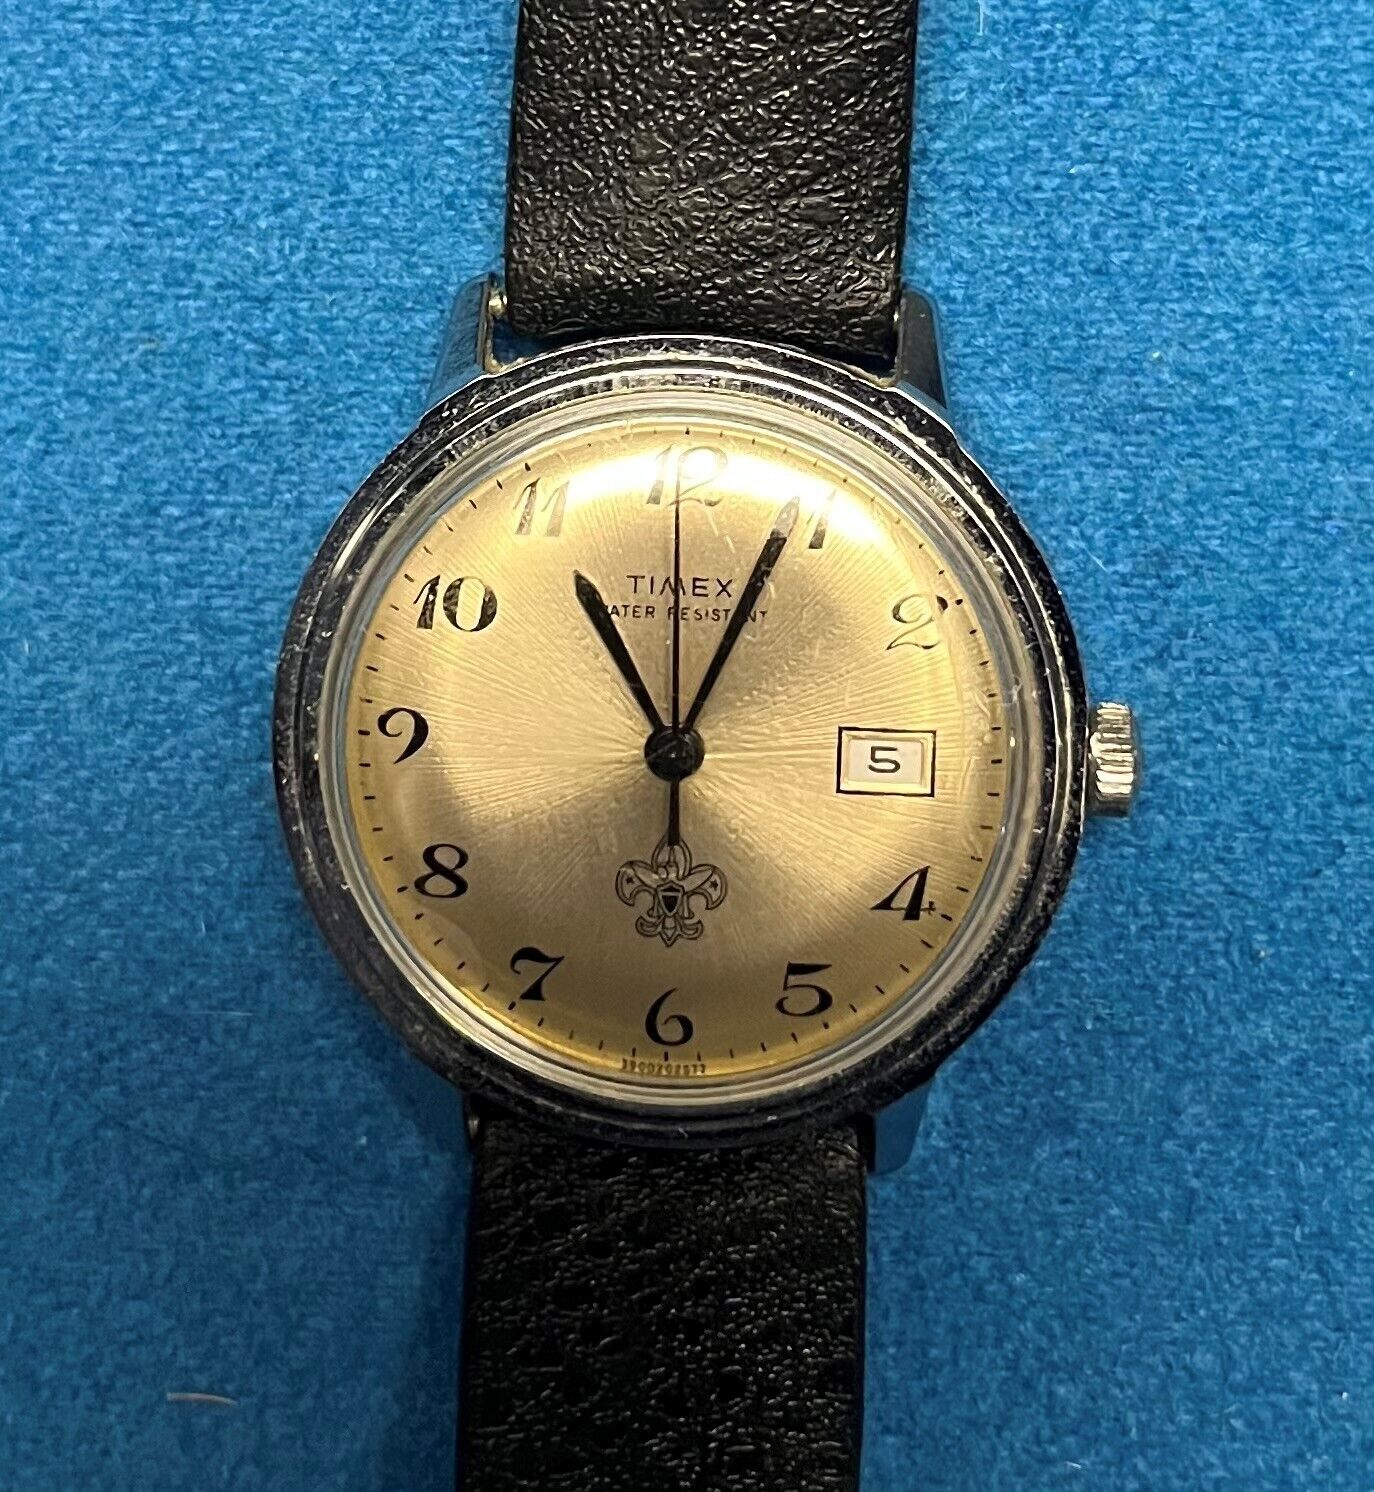 Vintage Timex Boy Scouts Watch - BSA - Water Resistant